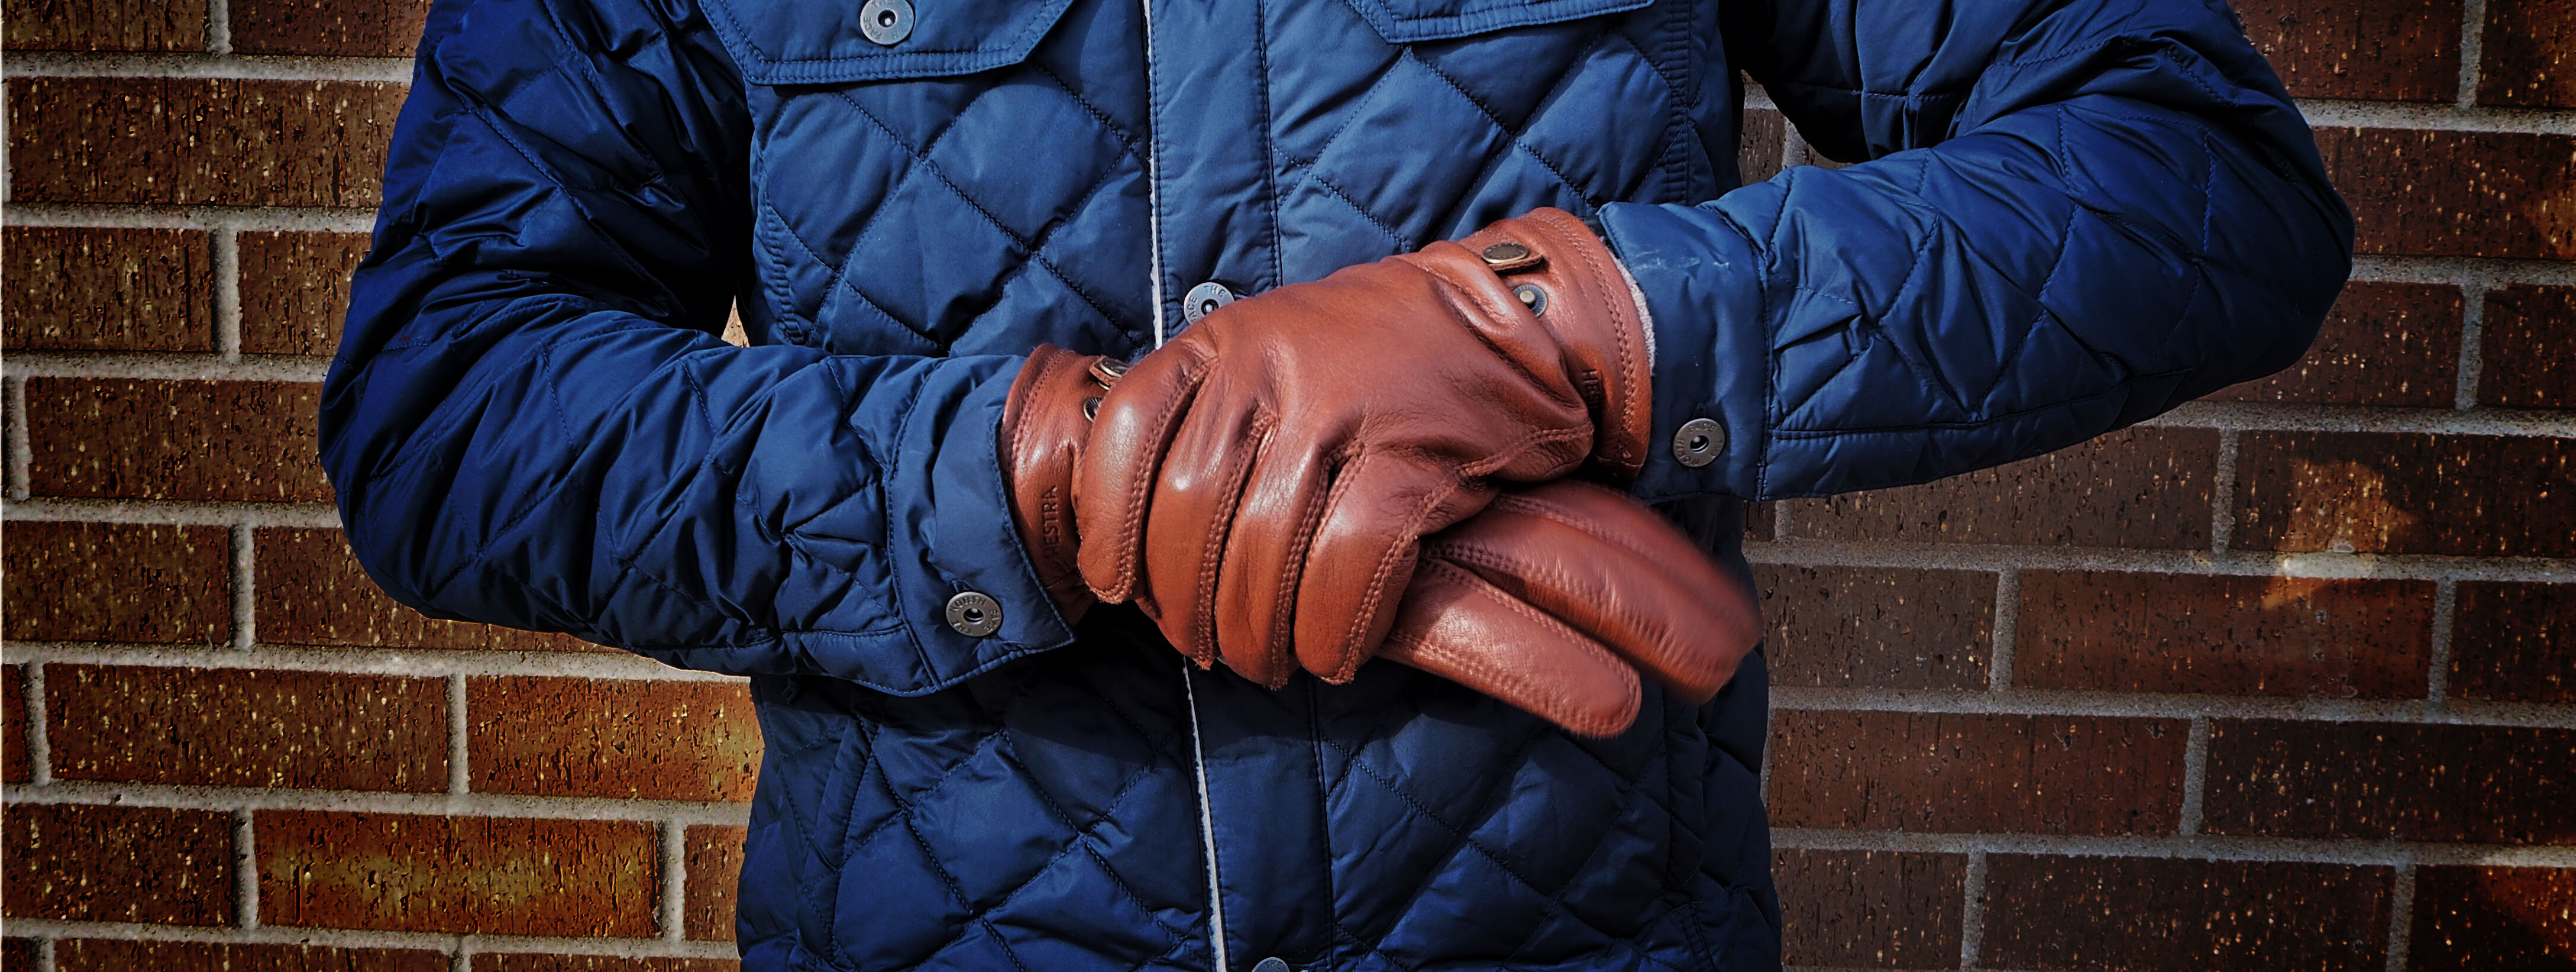 Featured Gear: Hestra Gloves